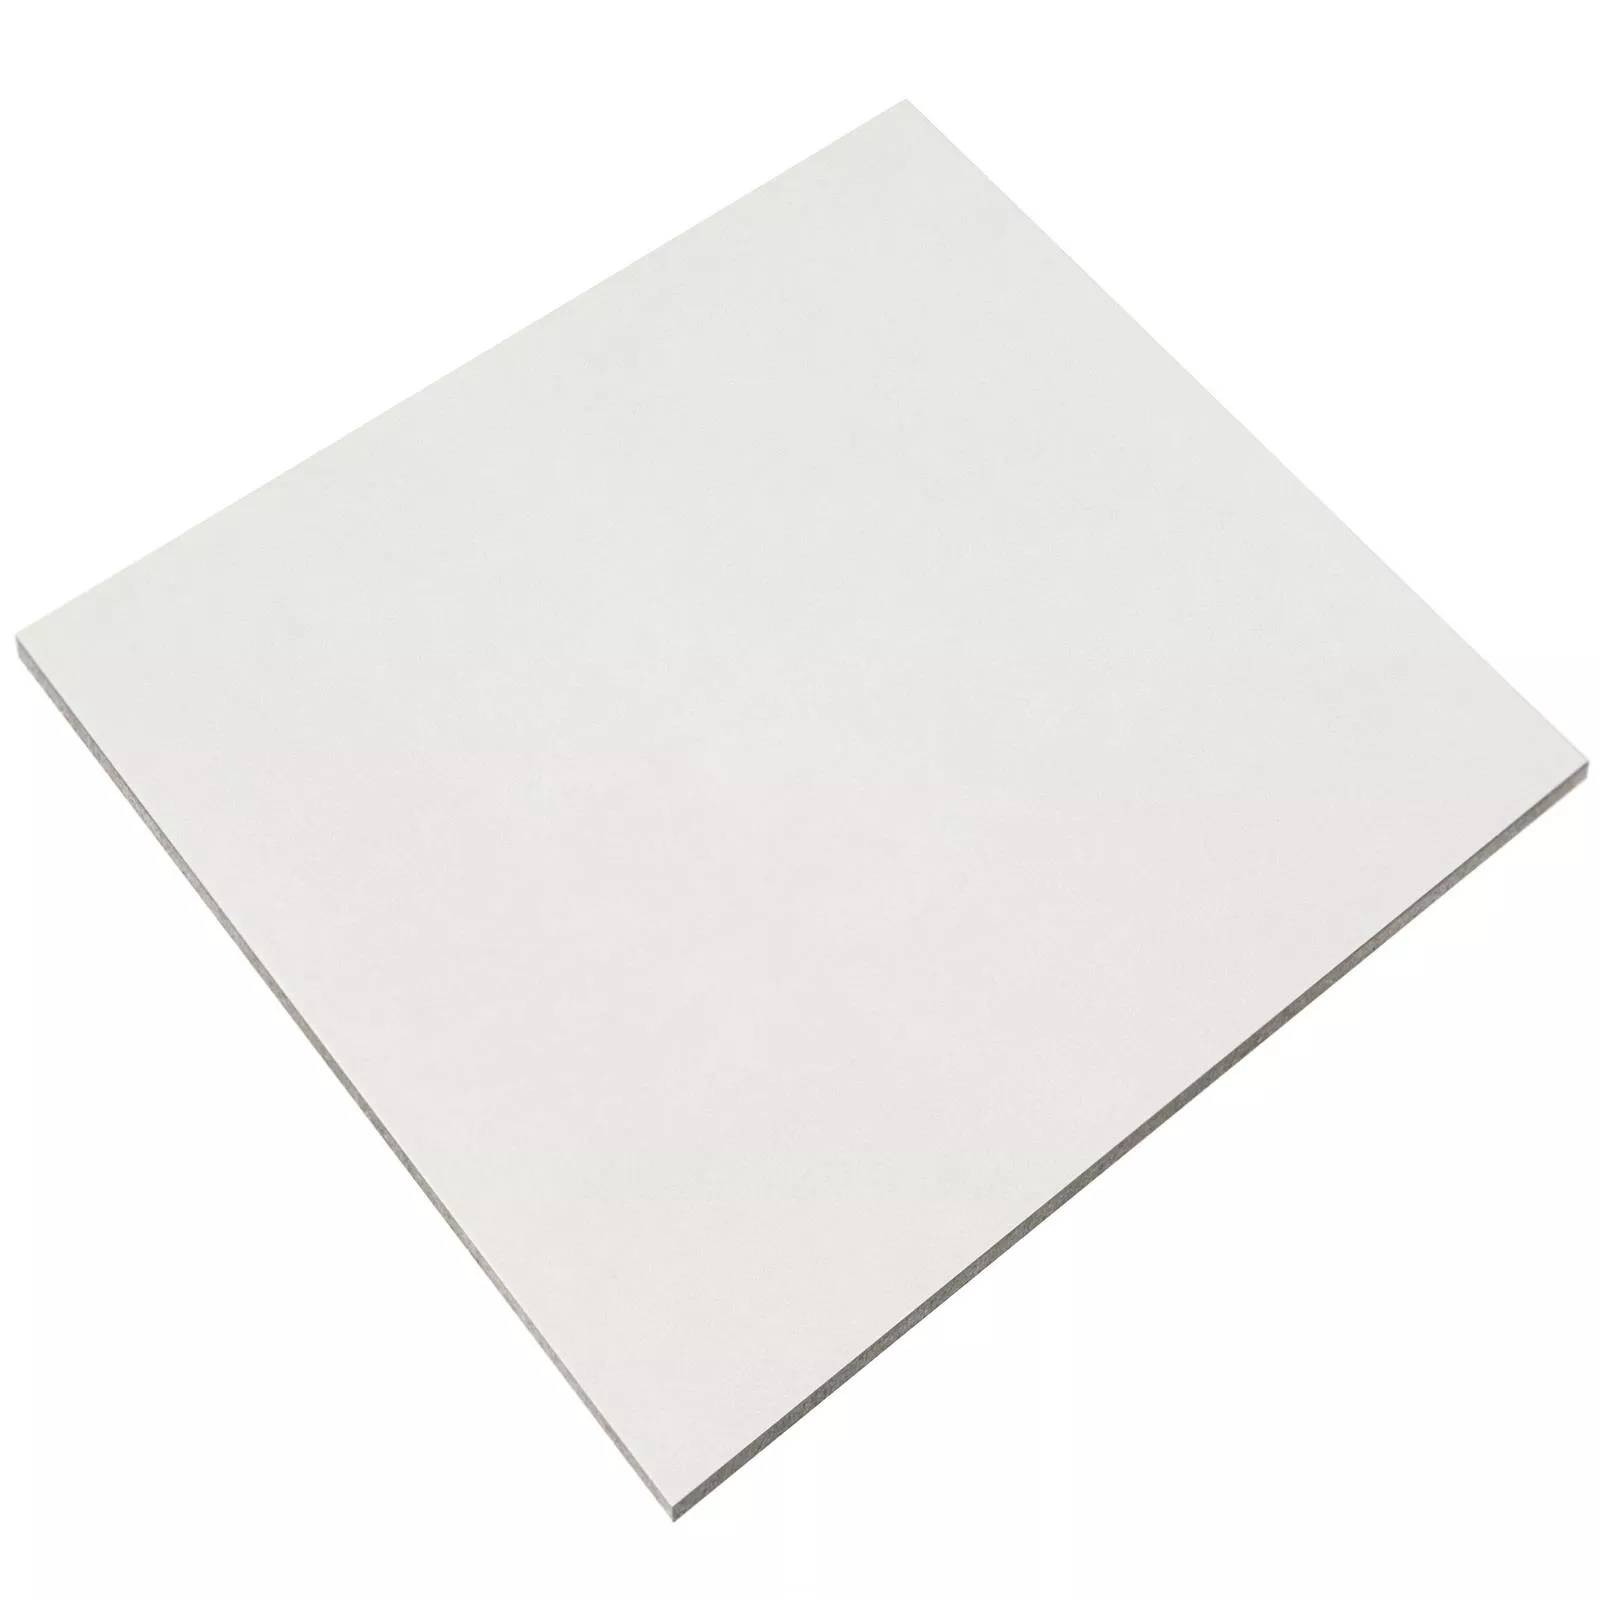 Piastrelle Mainland Cemento Ottica Lucidato 60x60cm Bianco